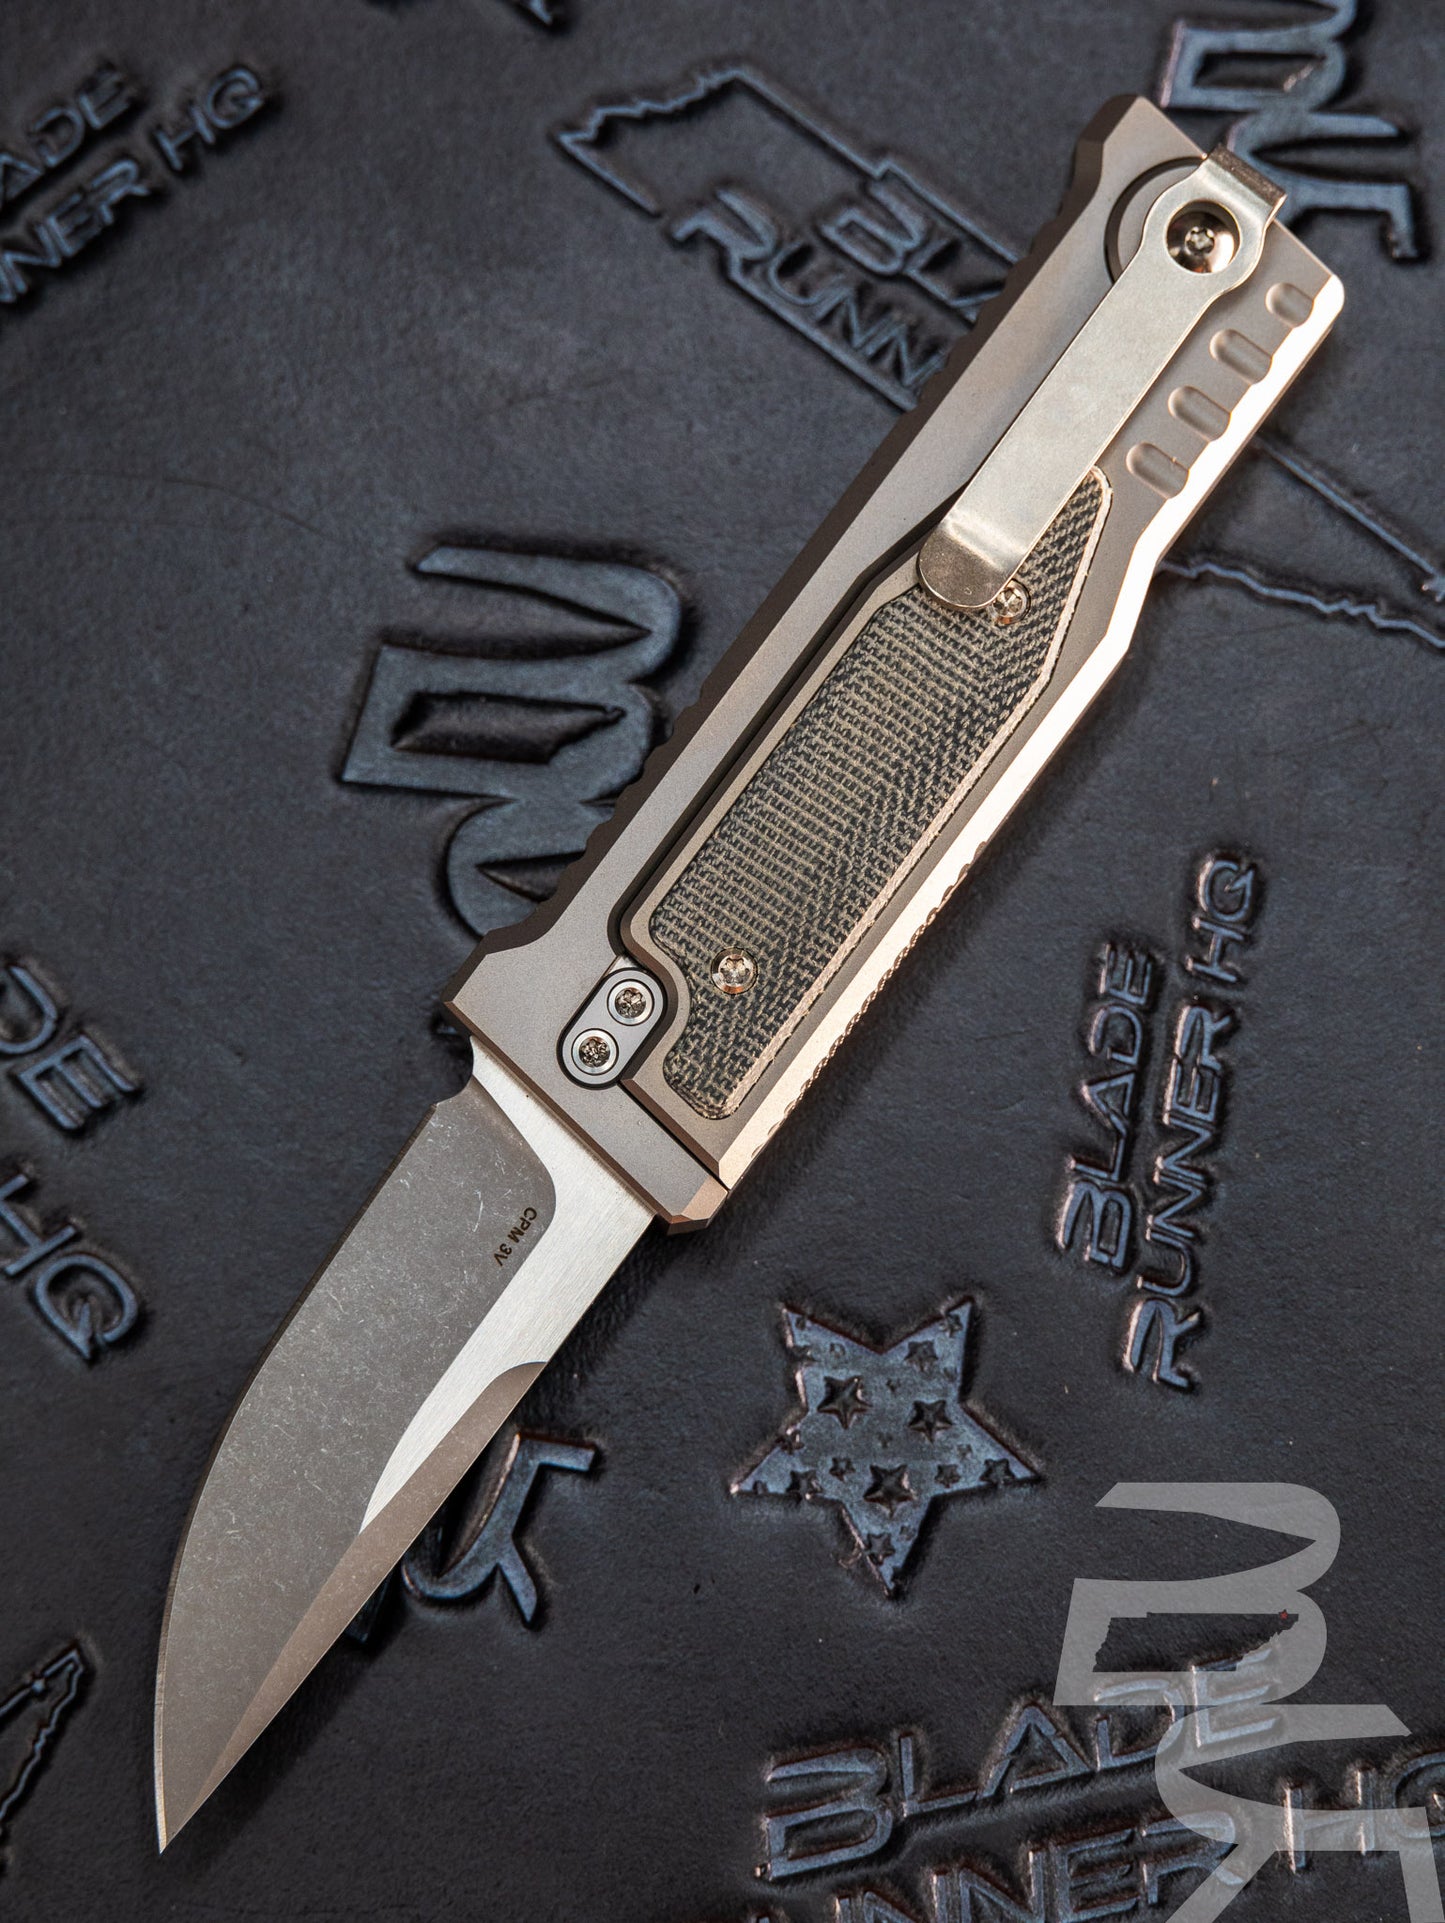 REATE EXO-MINI POCKET KNIFE BLACK MICARTA INLAY HANDLE CPM-3V DROP POINT BLADE